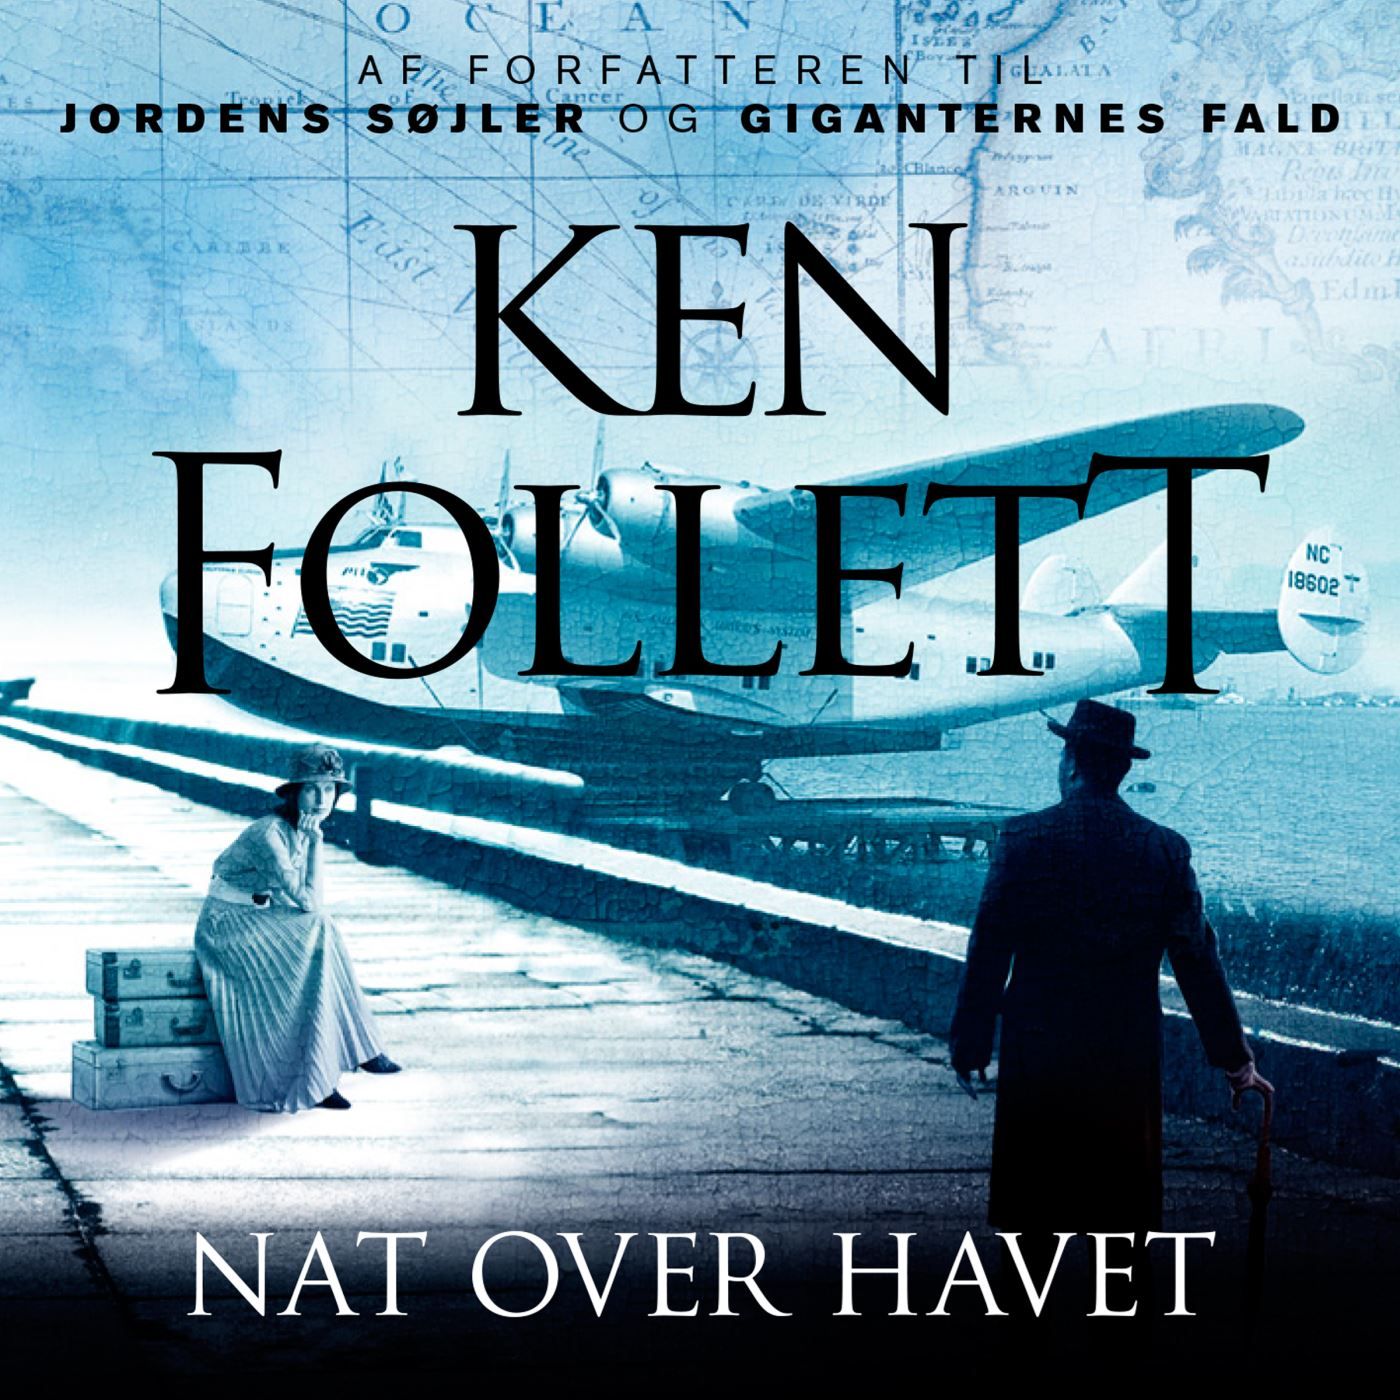 Nat over havet, audiobook by Ken Follett